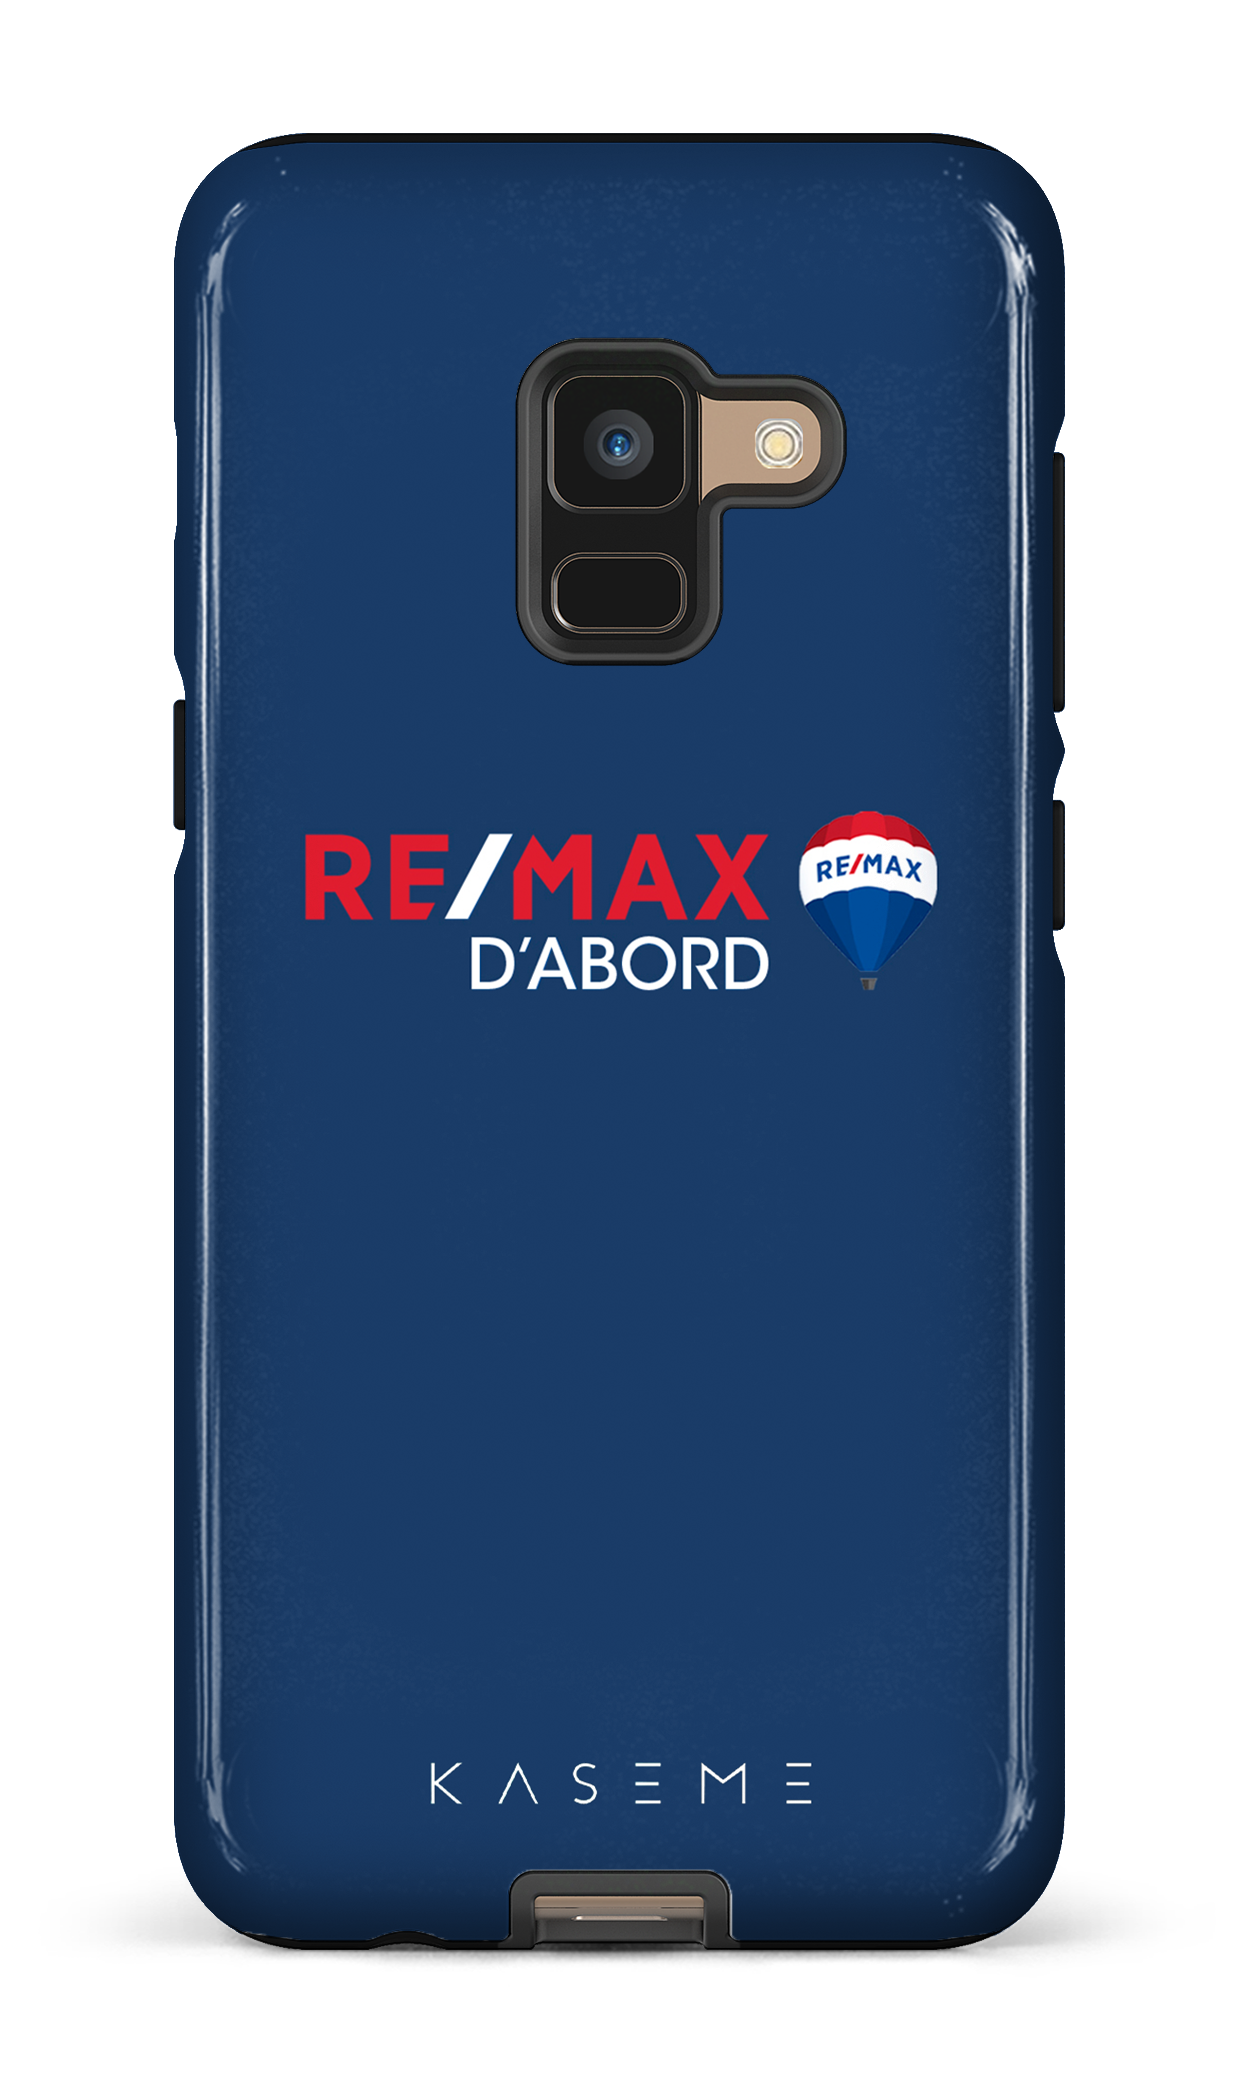 Remax D'abord Bleu - Galaxy A8